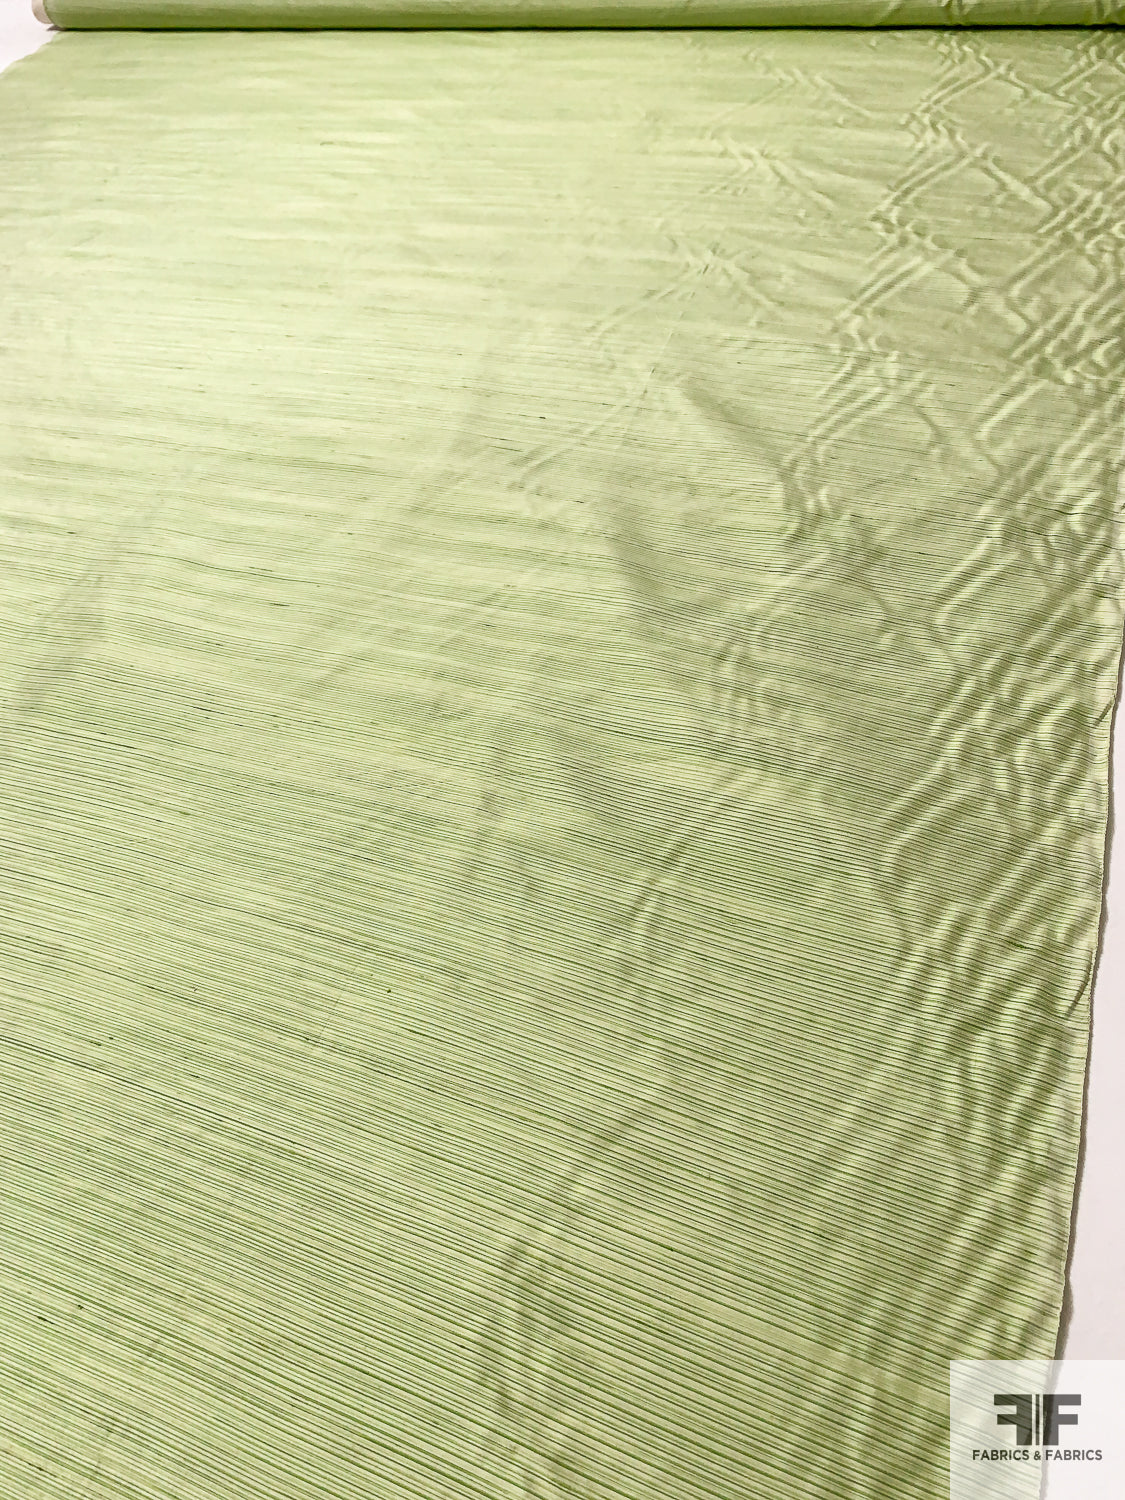 Italian Yarn-Dyed Horizontal Striped Silk Shantung - Shades of Green